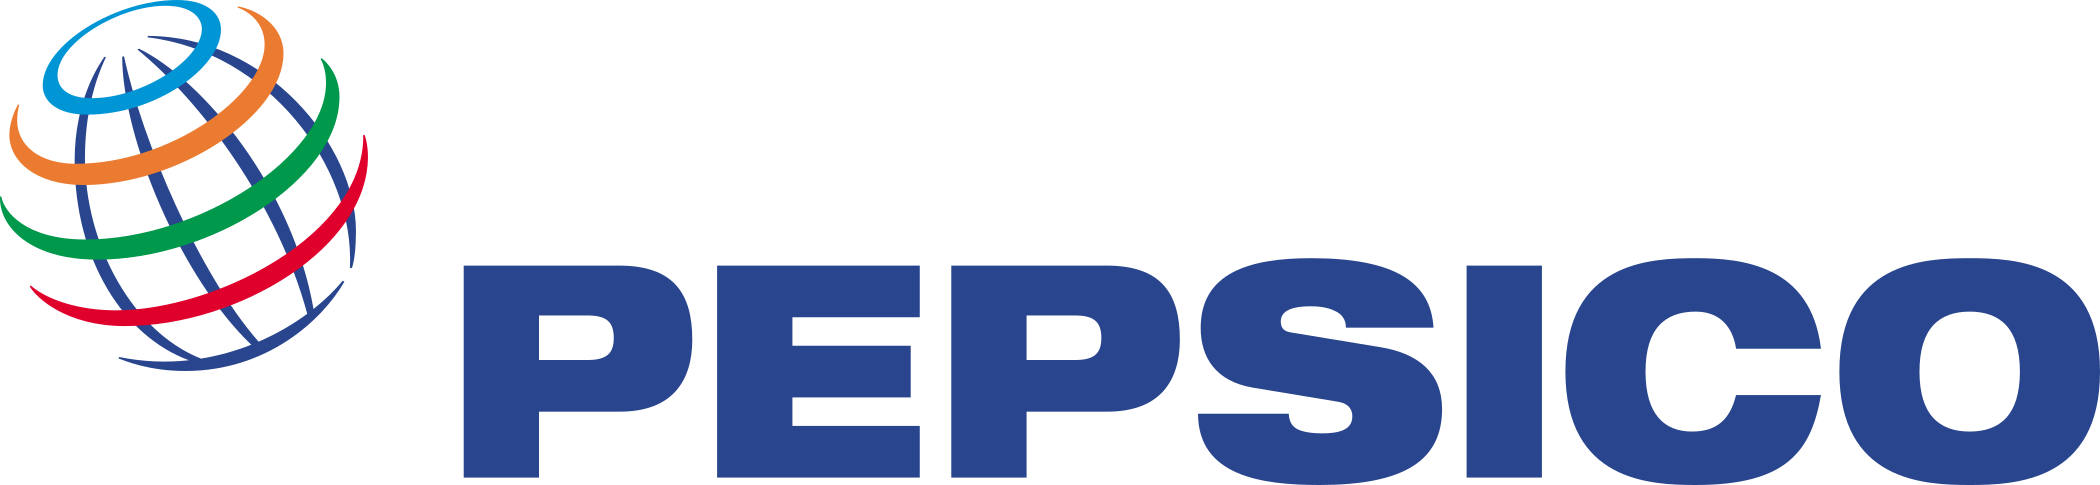 pepsico-logo-1.png